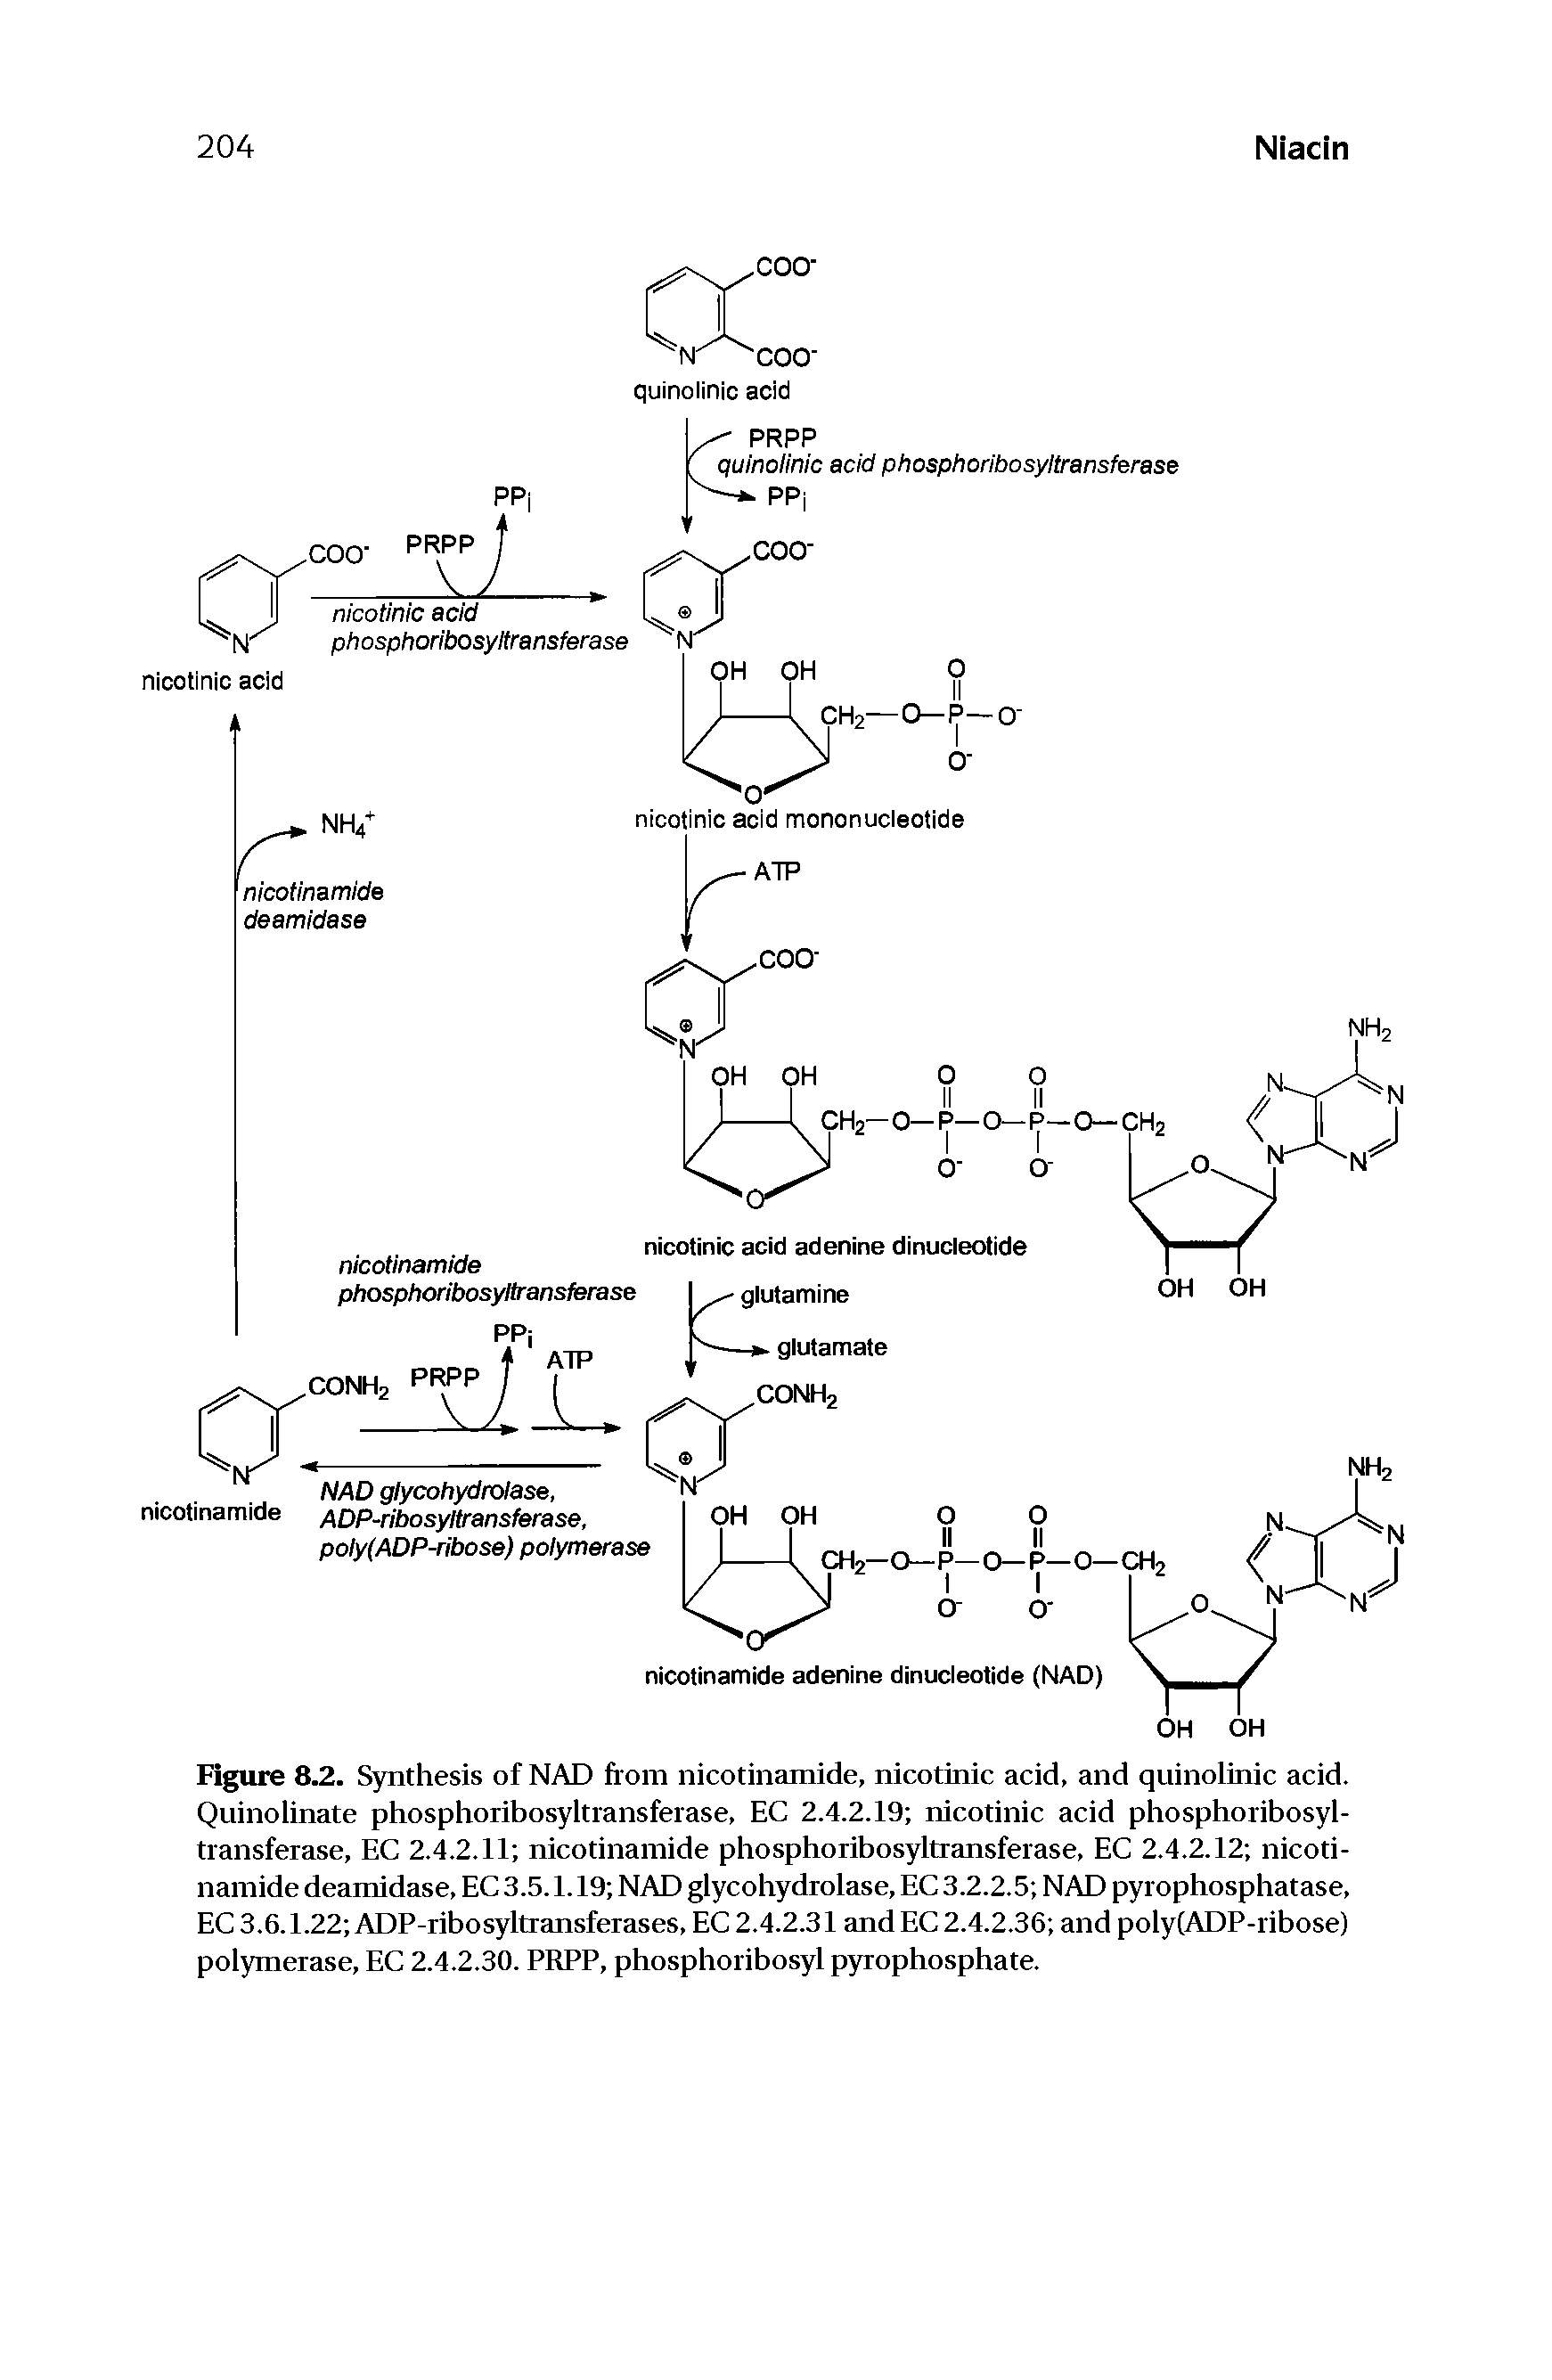 Figure 8.2. Synthesis of NAD from nicotinamide, nicotinic acid, and quinolinic acid. Qiiinolinate phosphoribosyltransferase, EC 2.4.2.19 nicotinic acid phosphoribosyl-transferase, EC 2.4.2.11 nicotinamide phosphoribosyltransferase, EC 2.4.2.12 nicotinamide deamidase, EC 3.5.1.19 NAD glycohydrolase, EC 3.2.2.5 NAD pyrophosphatase, EC3.6.1.22 ADP-ribosyltransferases, EC 2.4.2.31 and EC 2.4.2.36 and poly(ADP-ribose) polymerase, EC 2.4.2.30. PRPP, phosphoribosyl pyrophosphate.